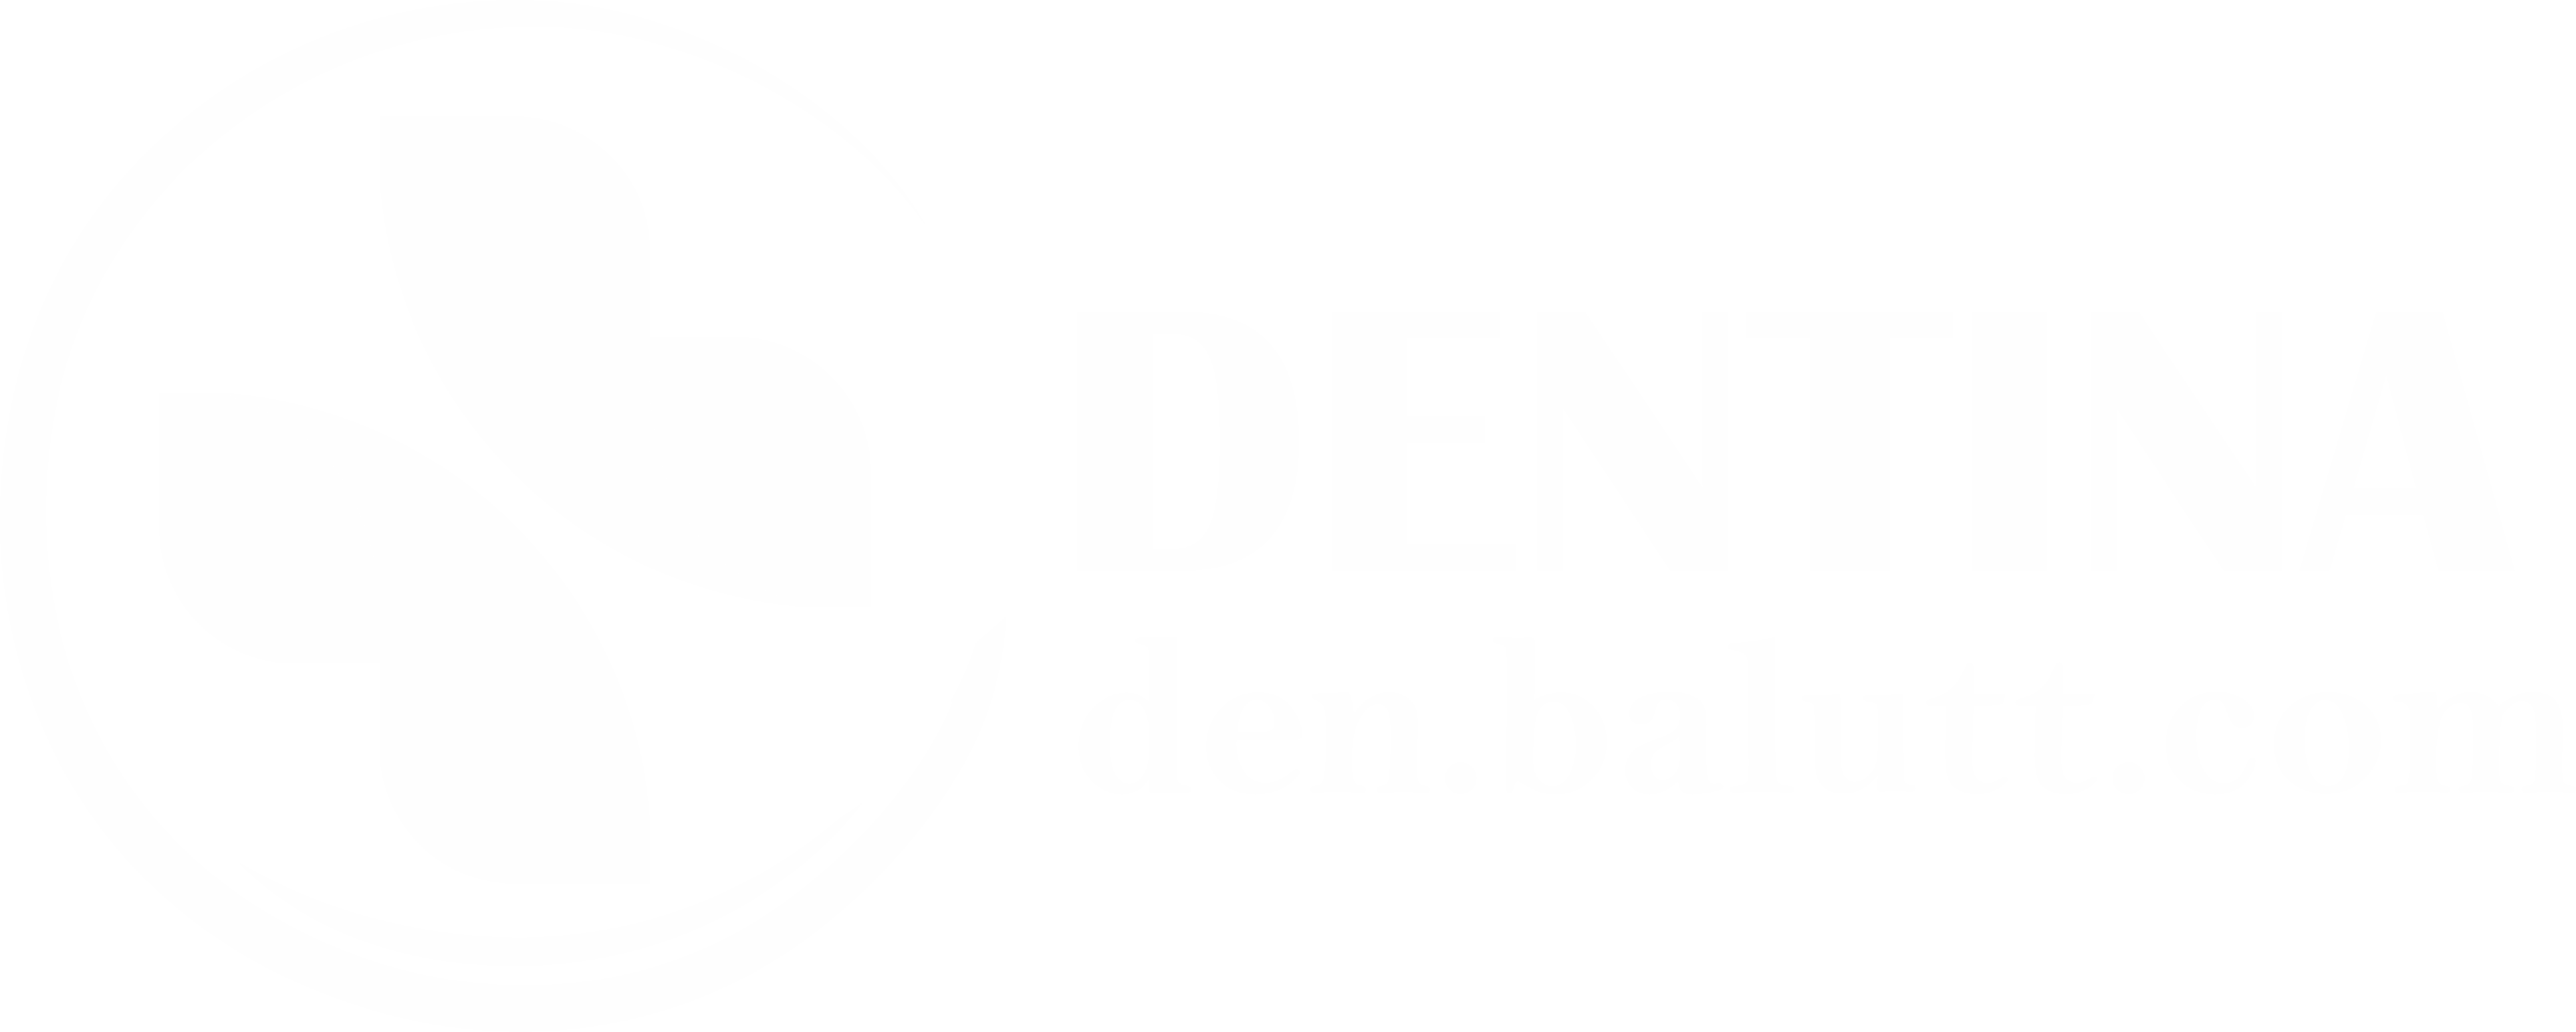 کلینیک پزشکی زیبایی دنتینا | dentina